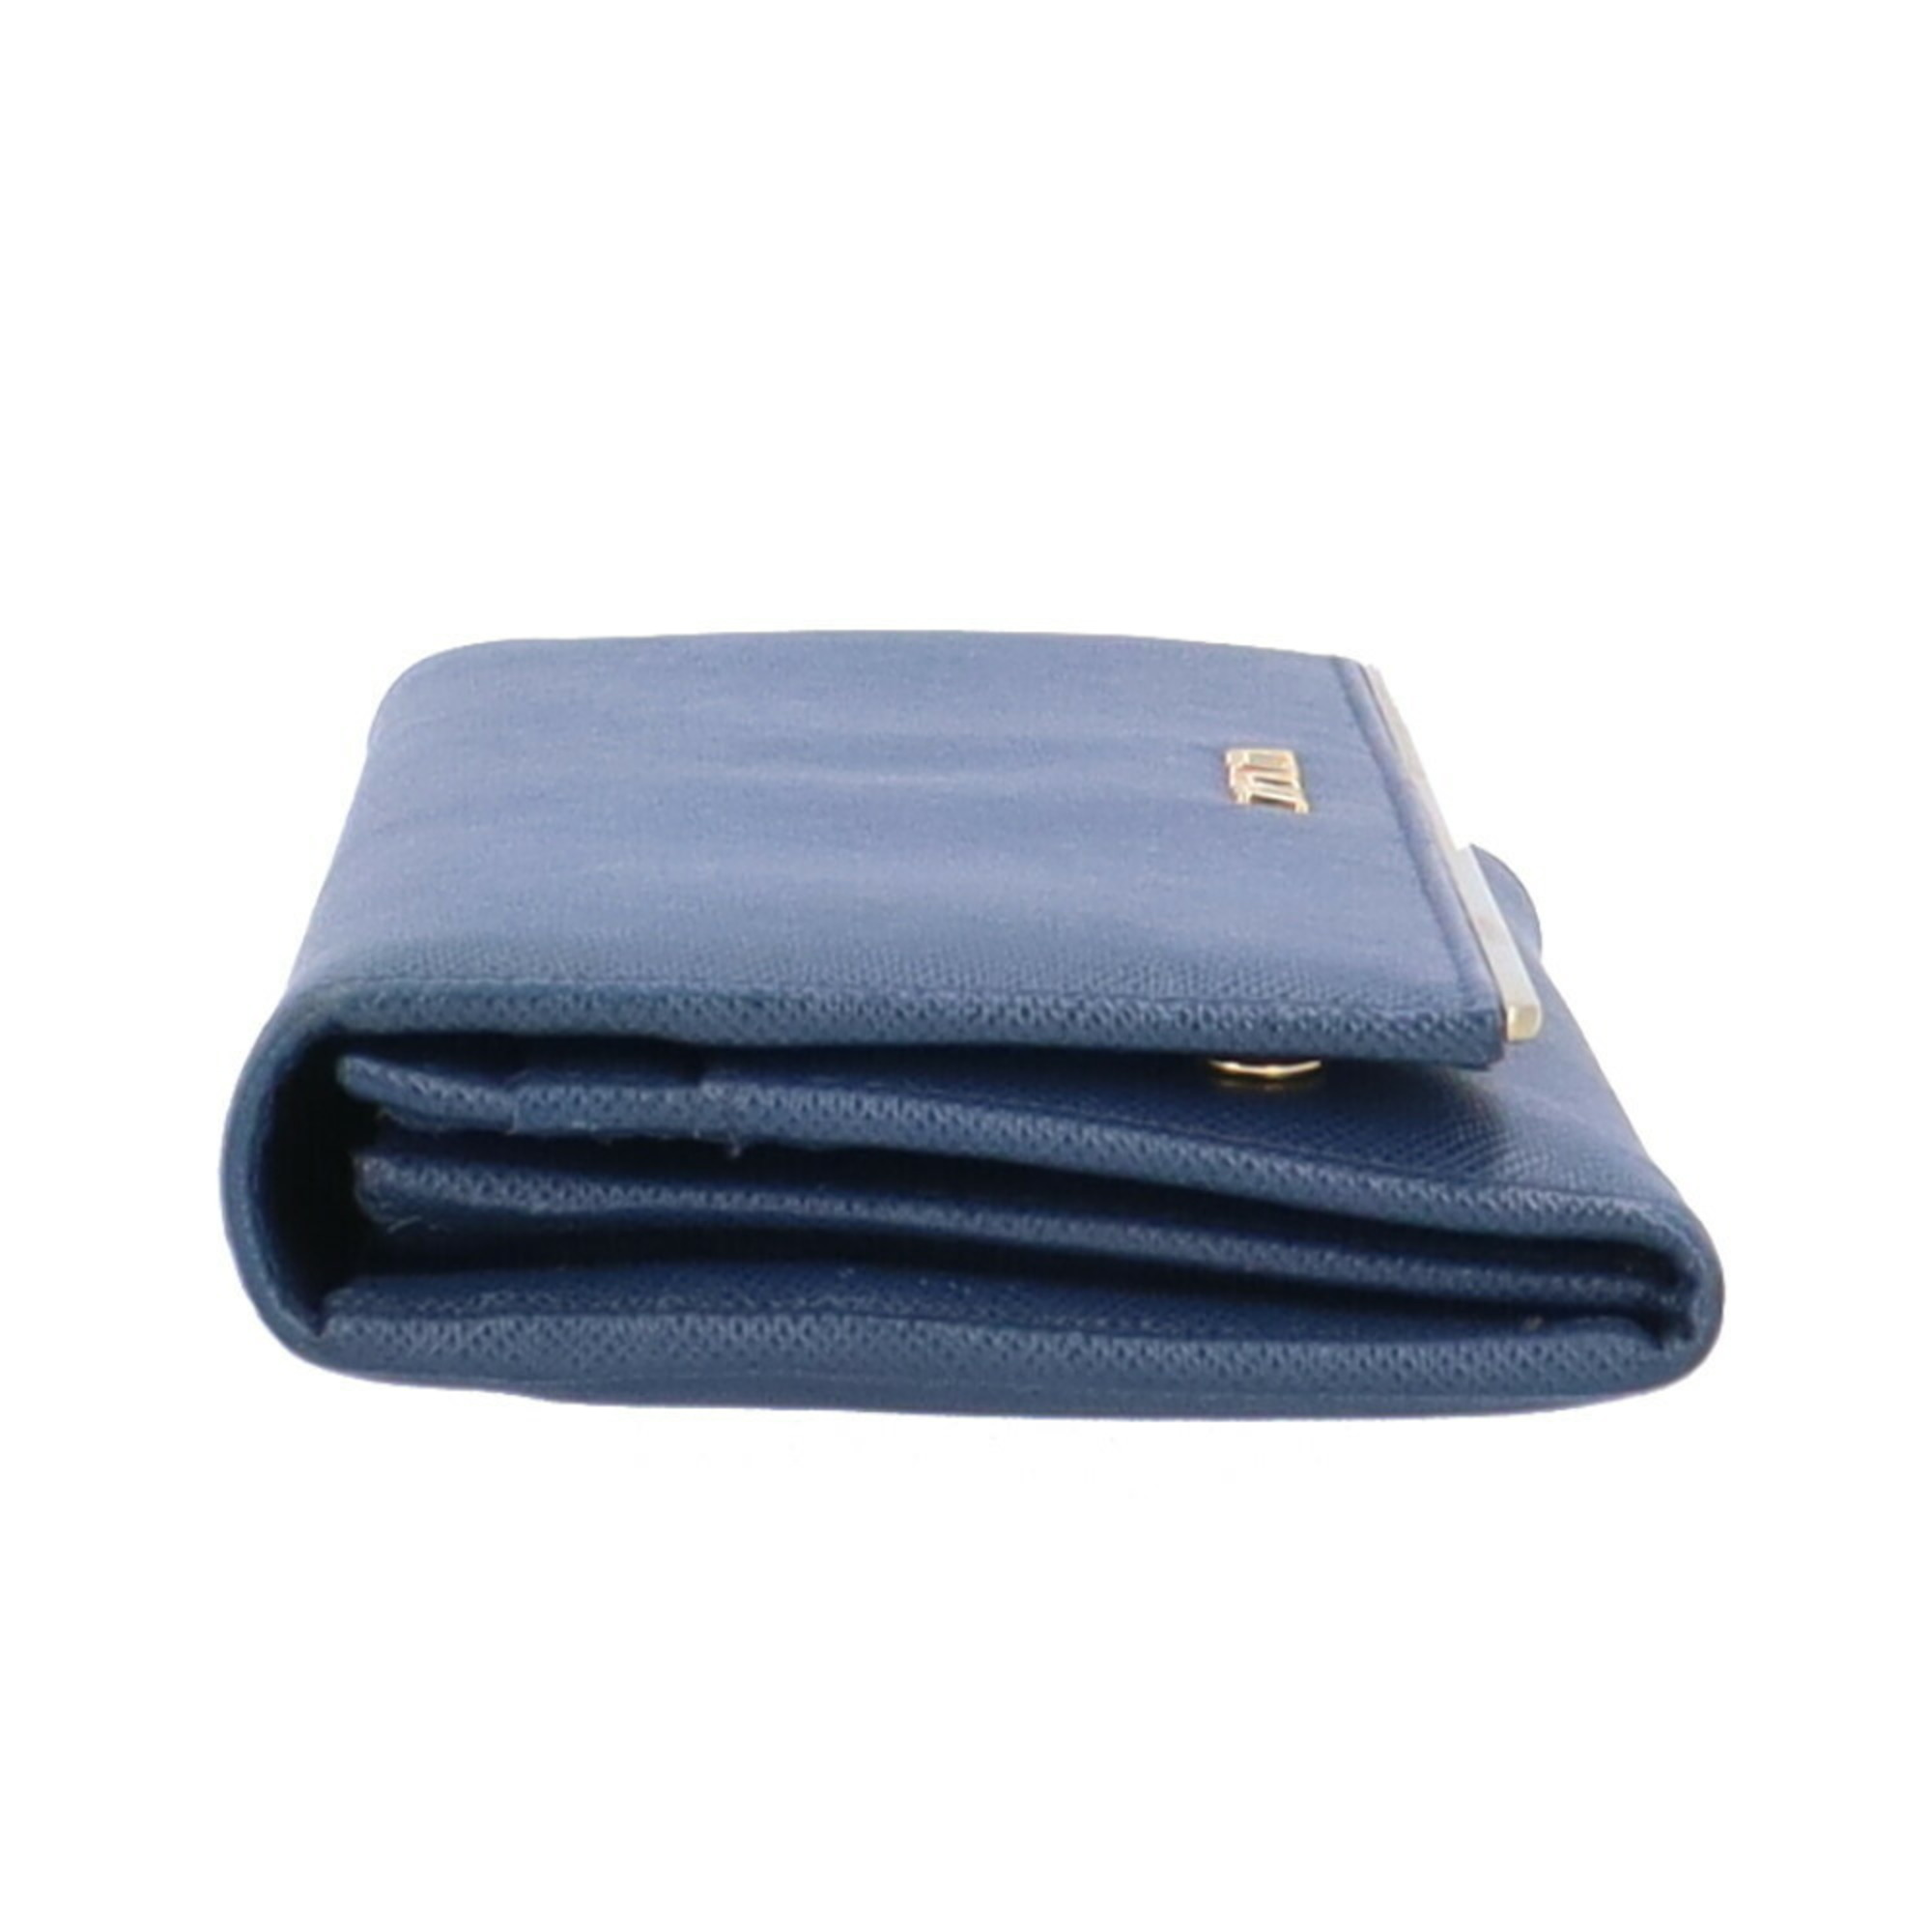 Prada Saffiano Long Wallet Leather 1M1132 Women's PRADA BRB10000000120767